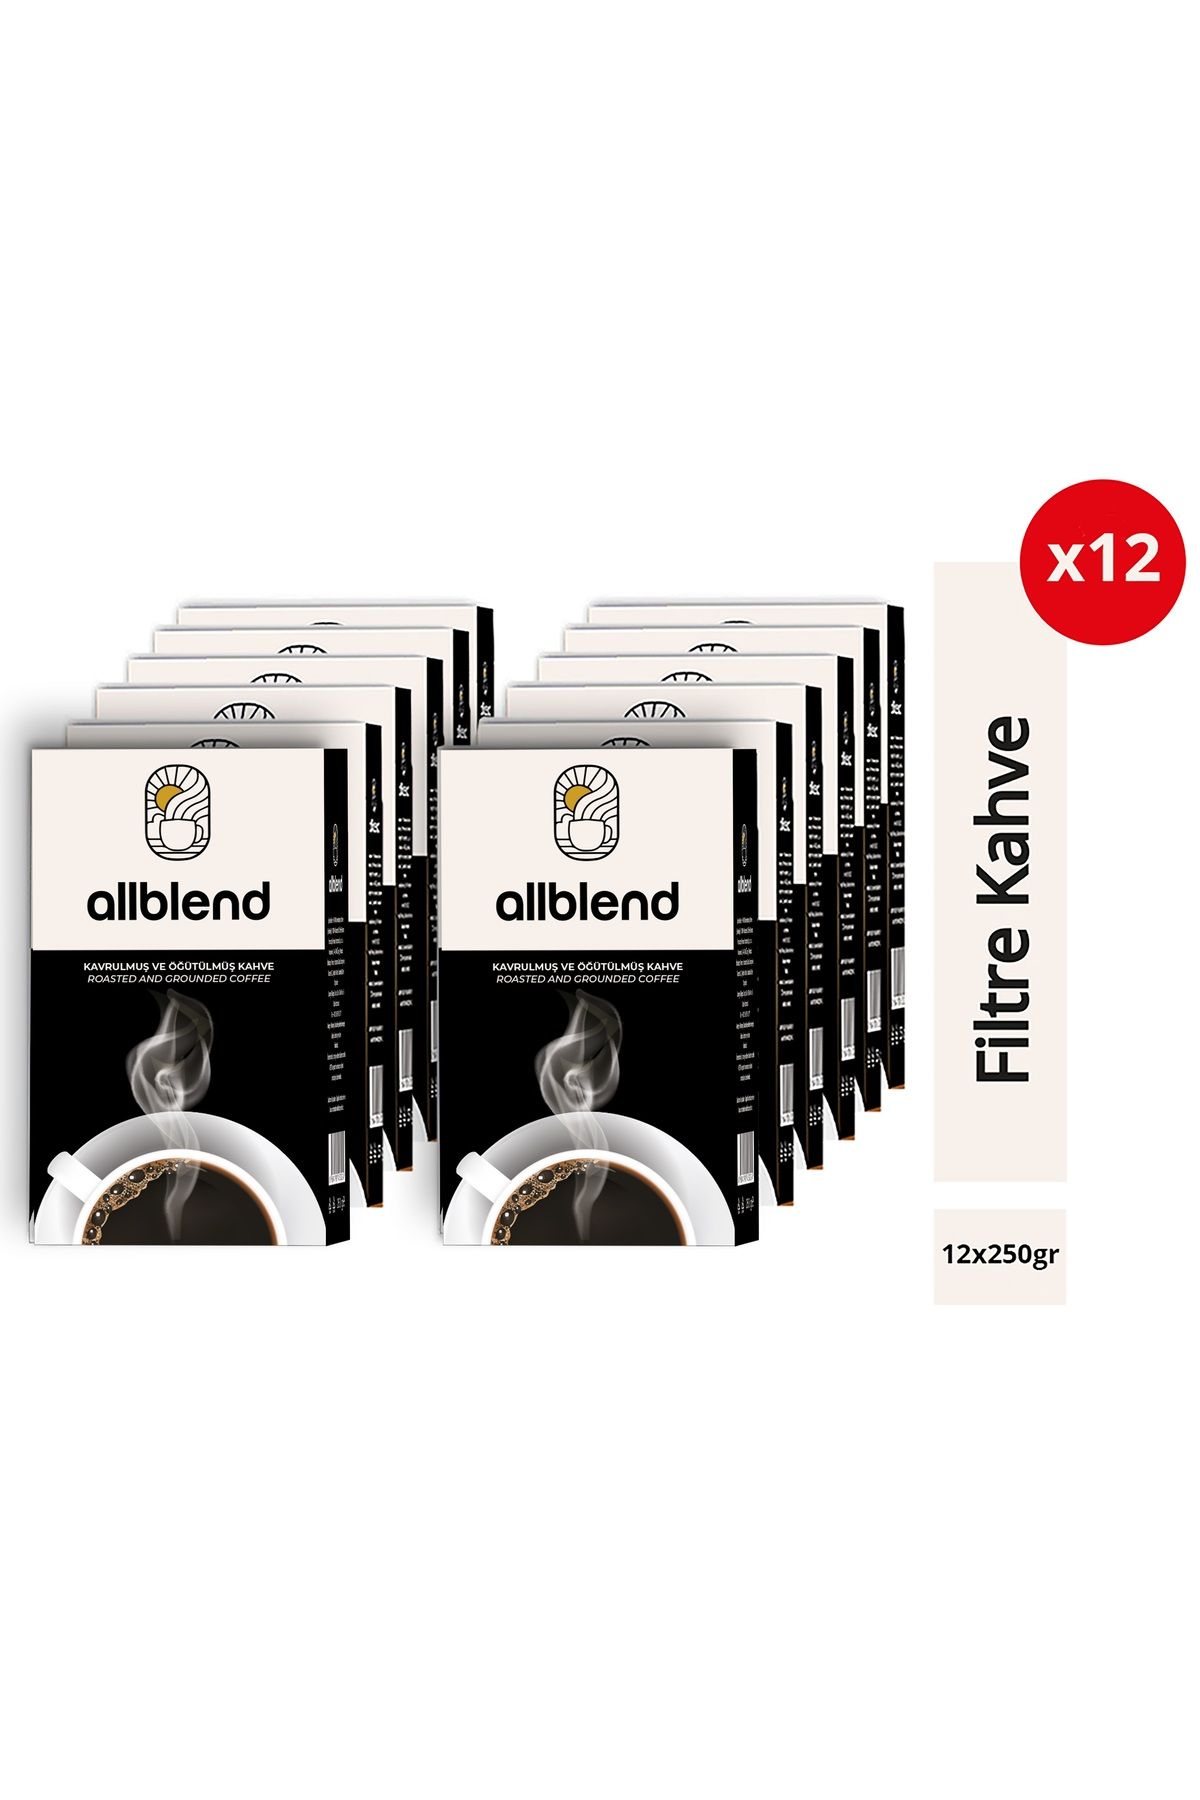 AllBlend Filtre Kahve 250 gr. x 12 Adet (Ofis Paketi) AB250X12